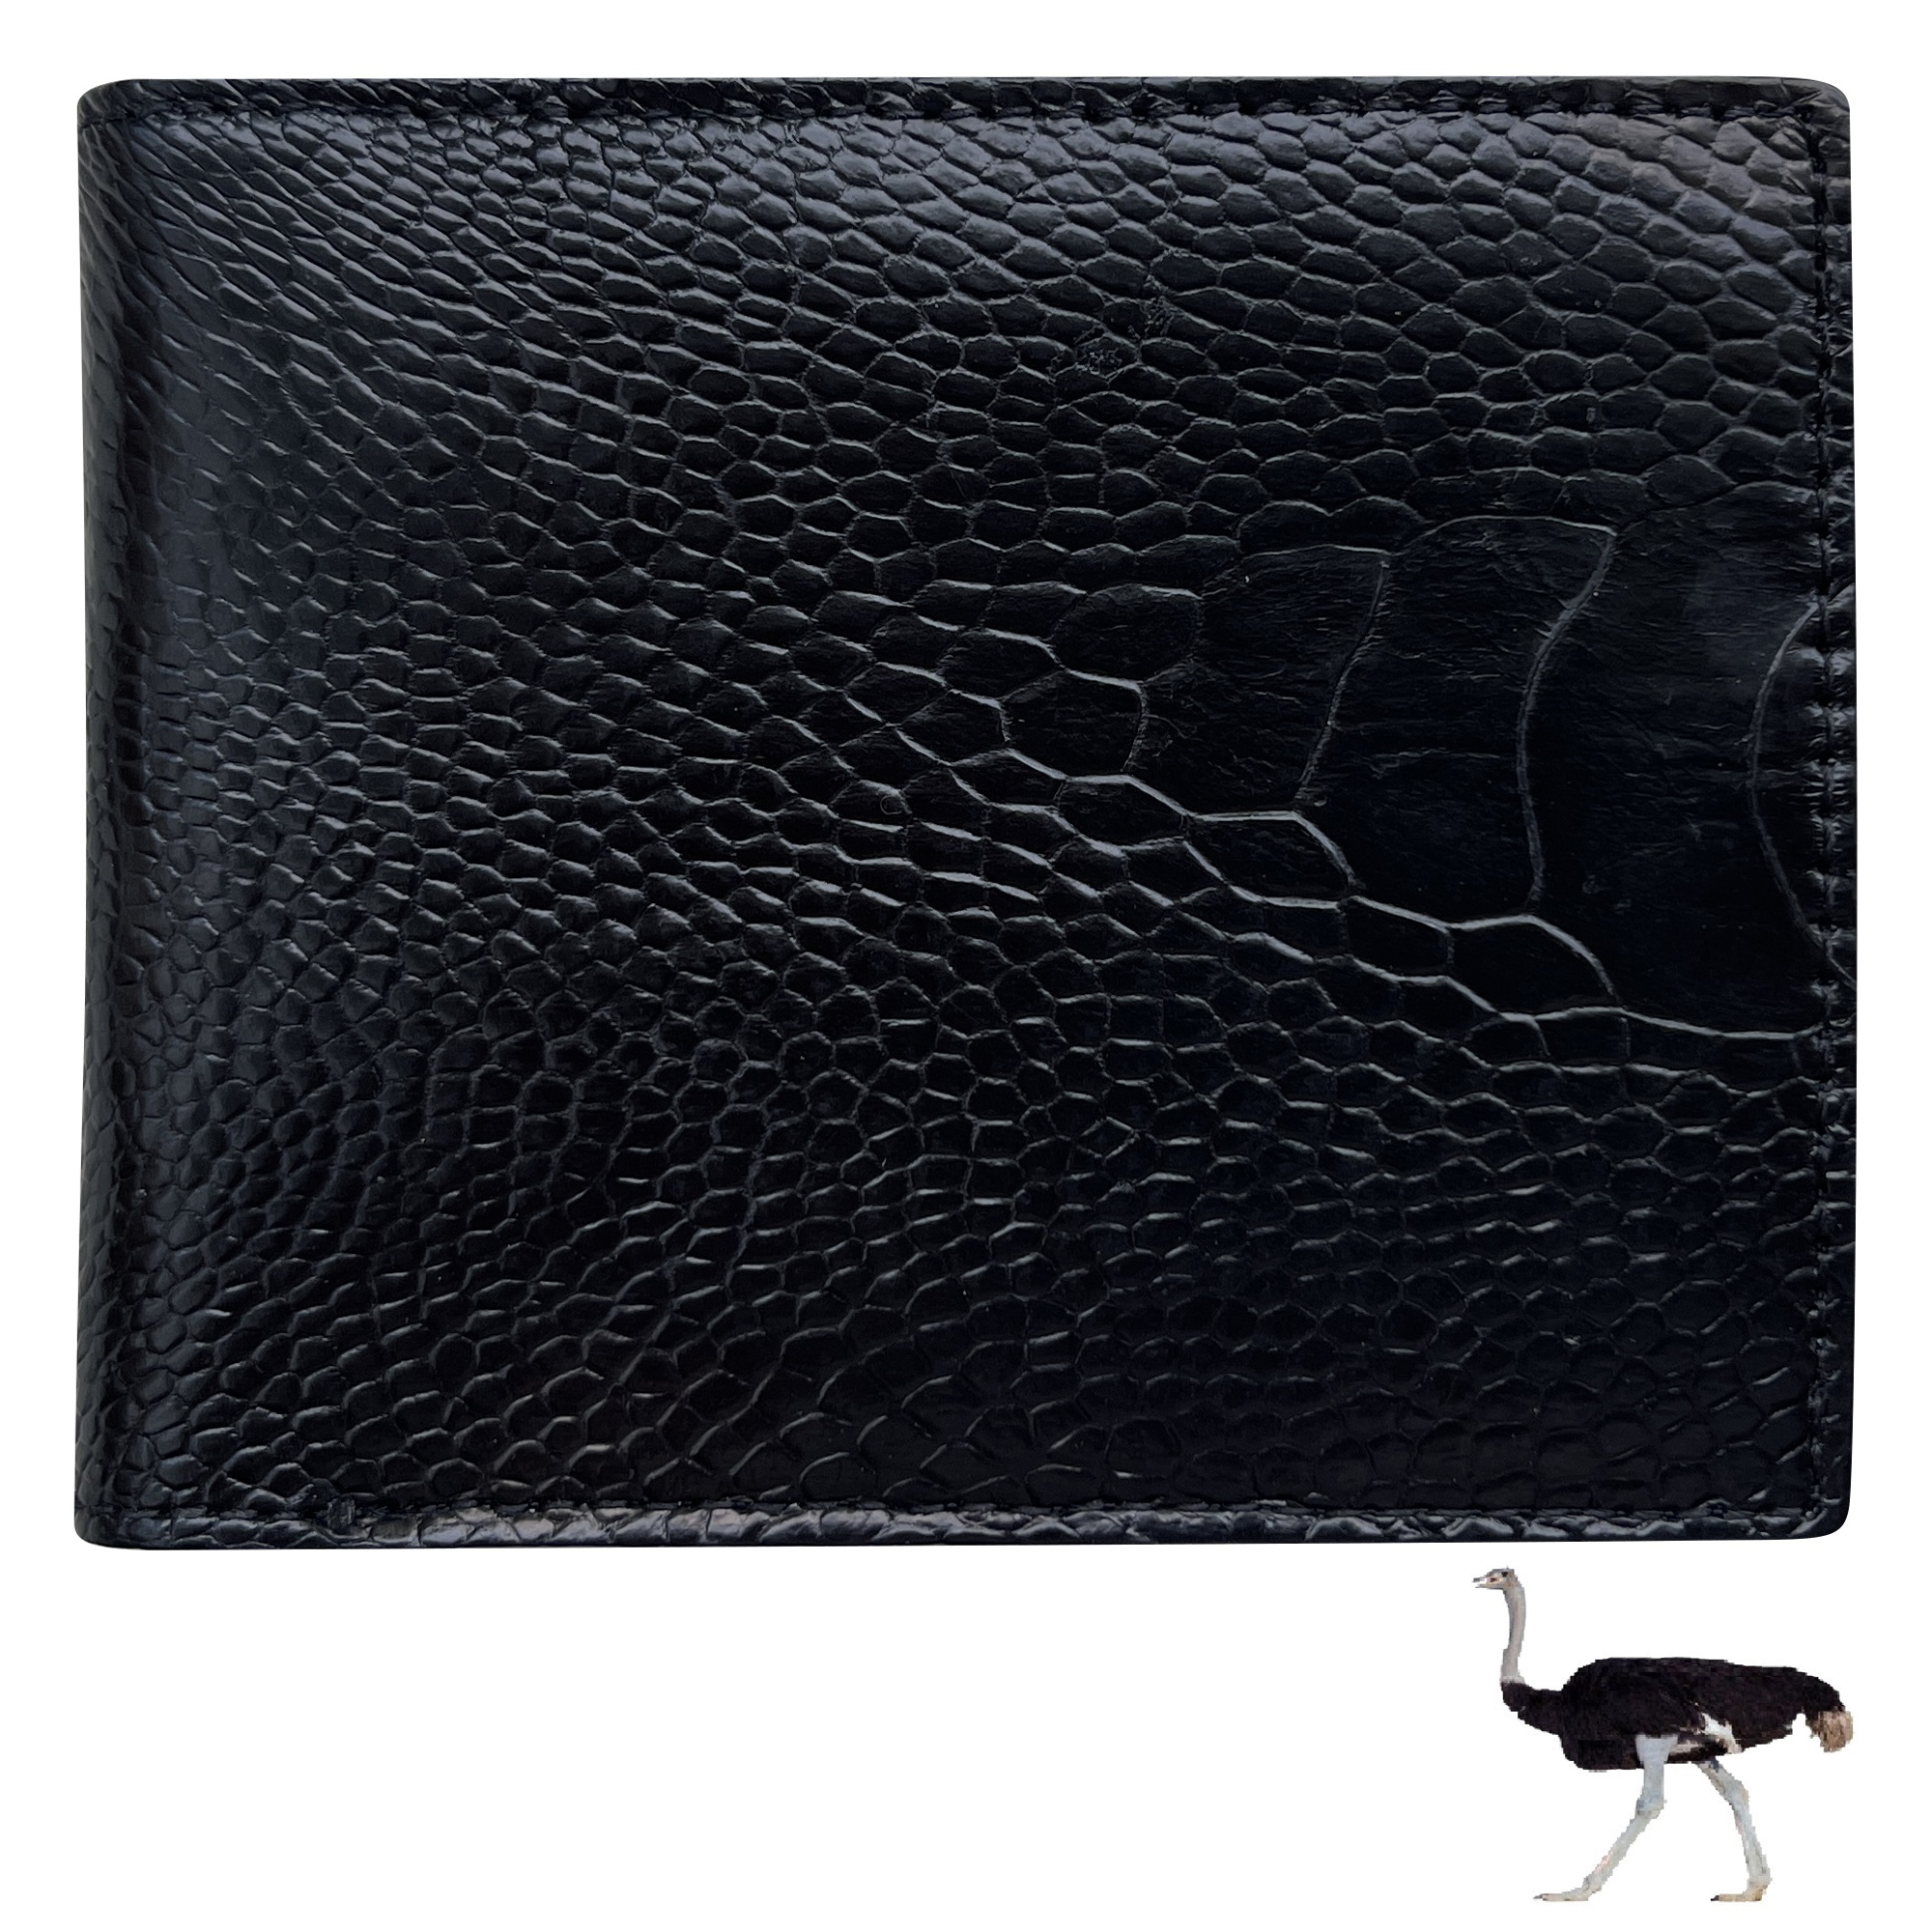 Ostrich Leather Wallet Luxury Wallets